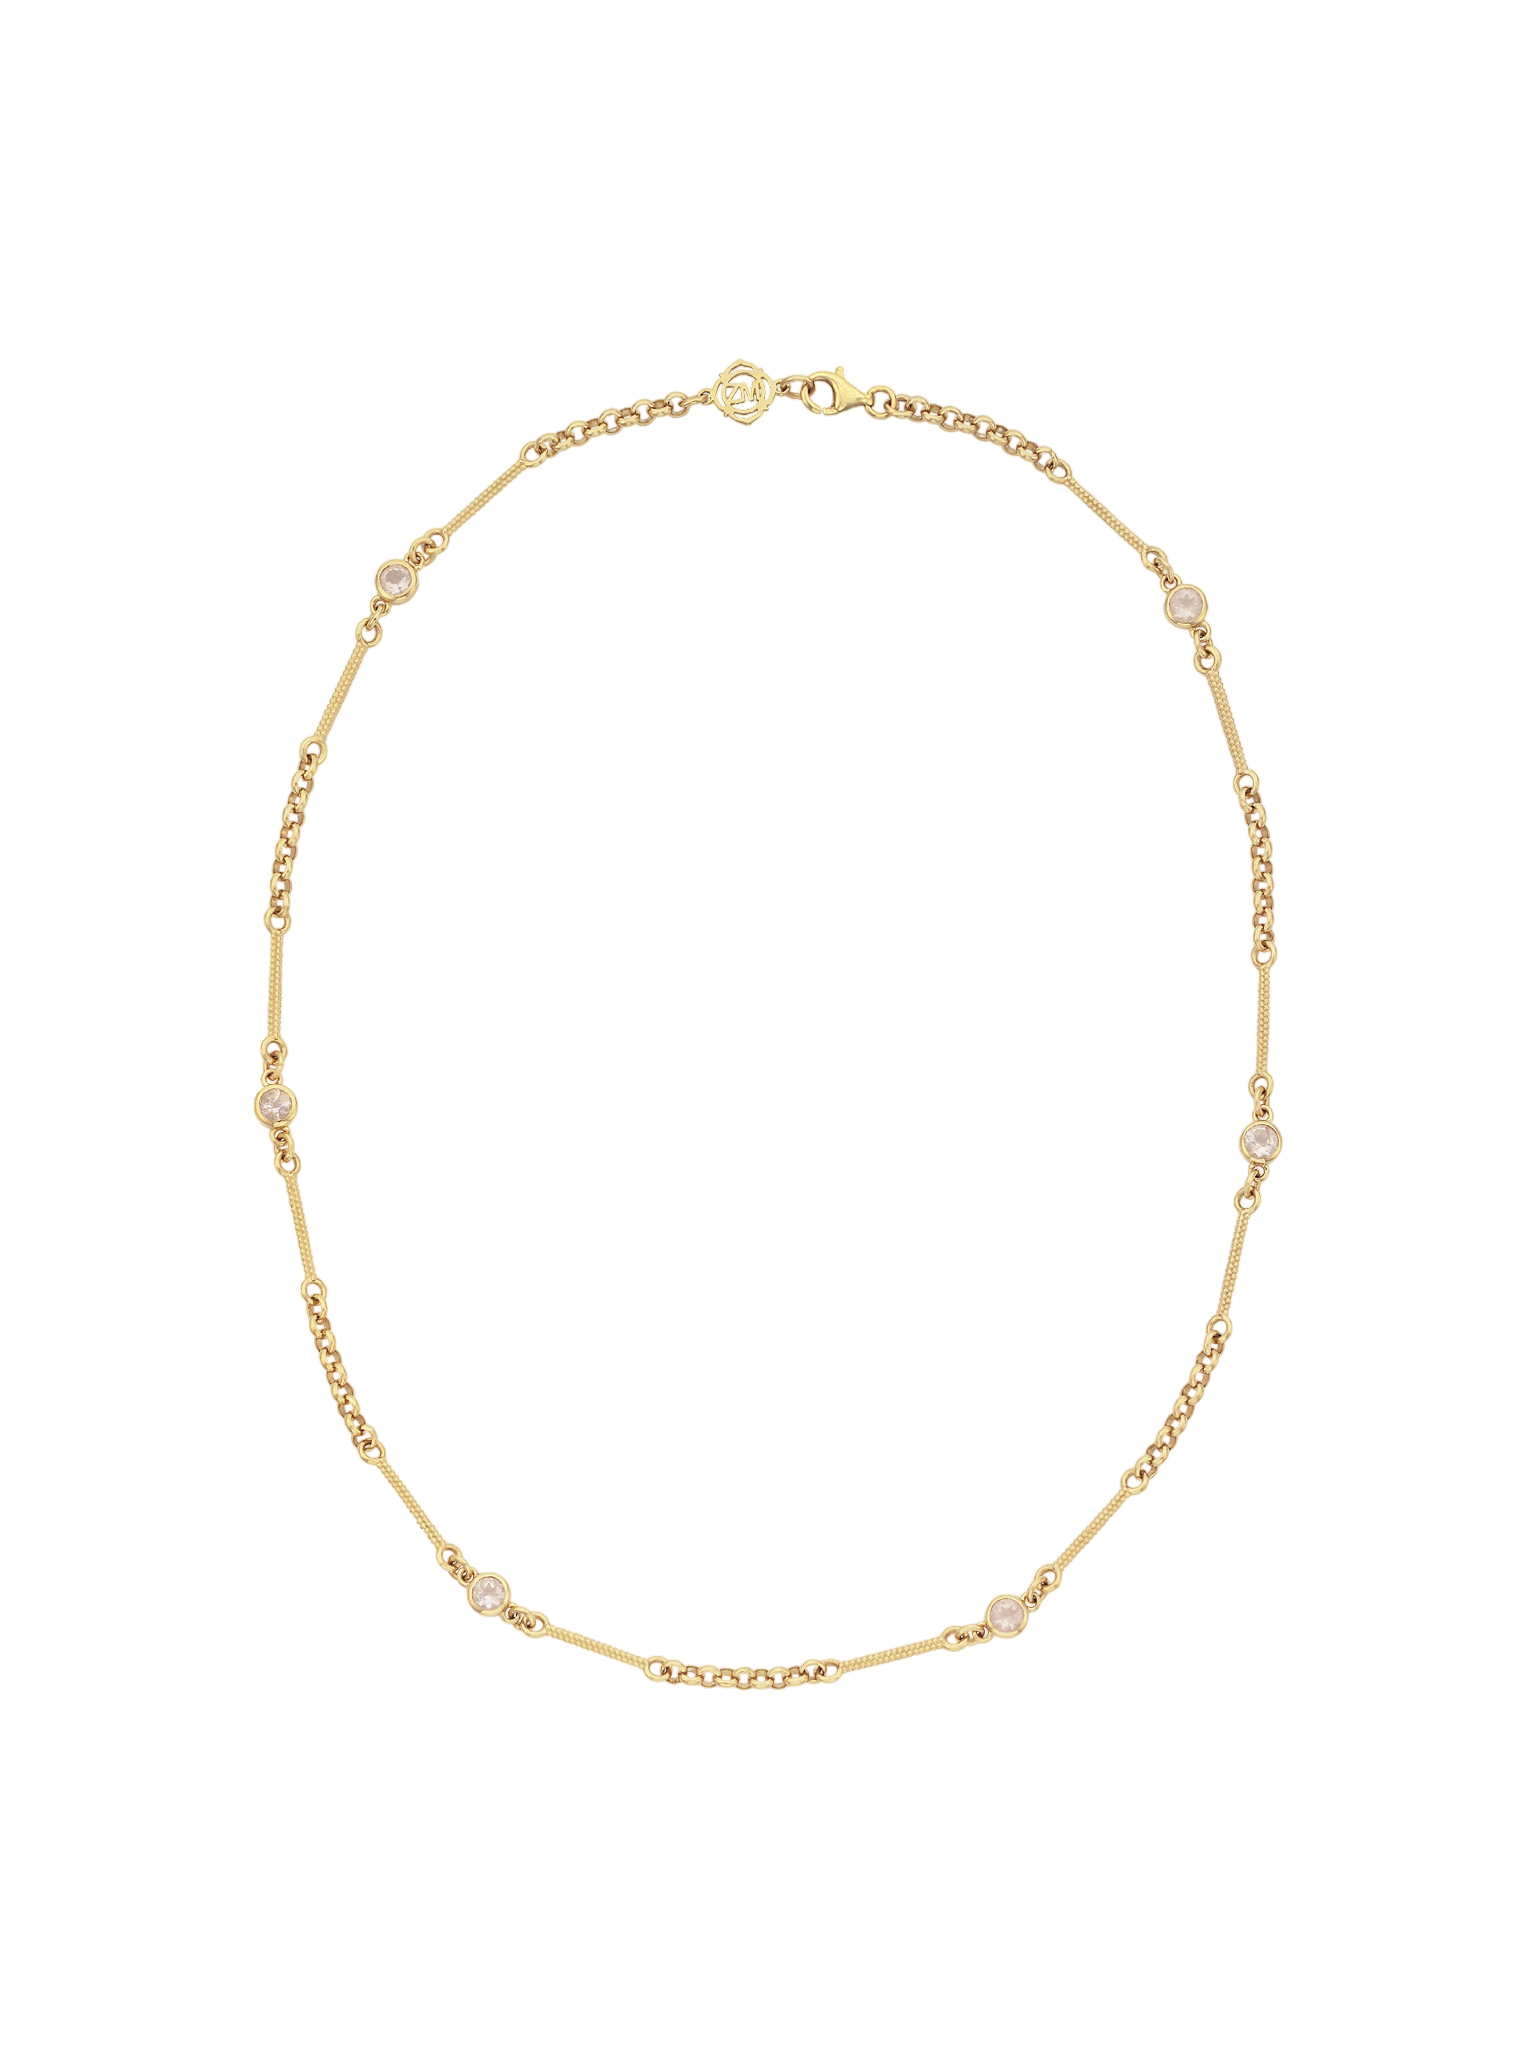 Azalea rose quartz necklace